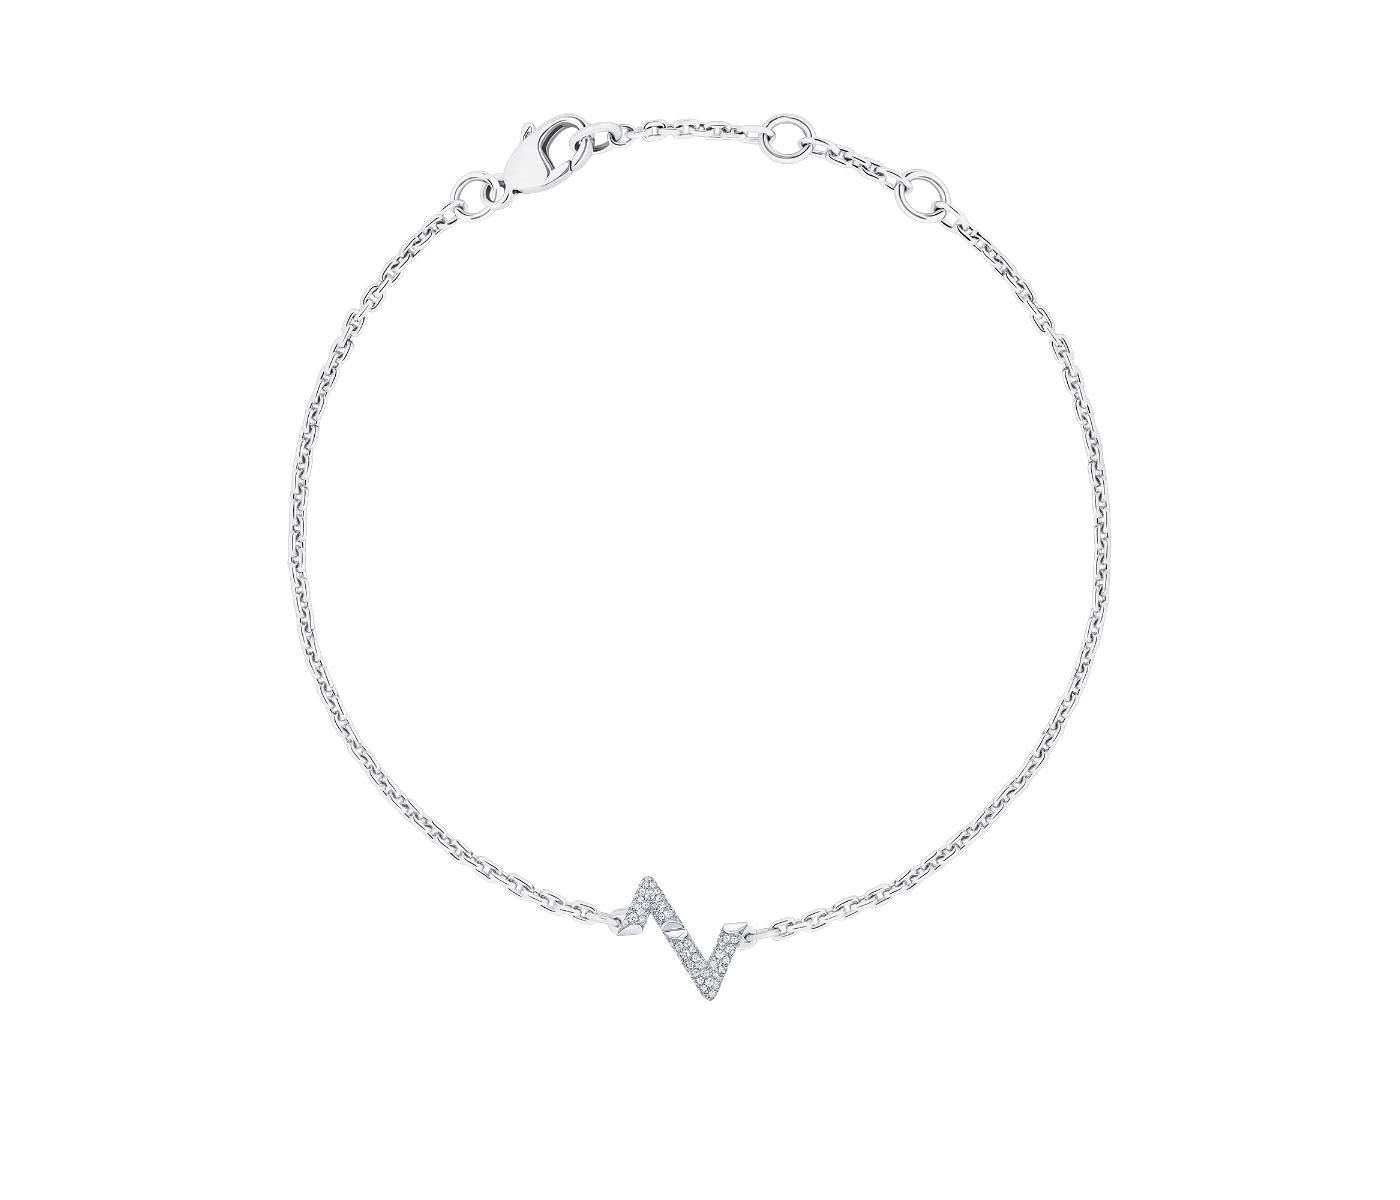 Bracelet by Louis Vuitton